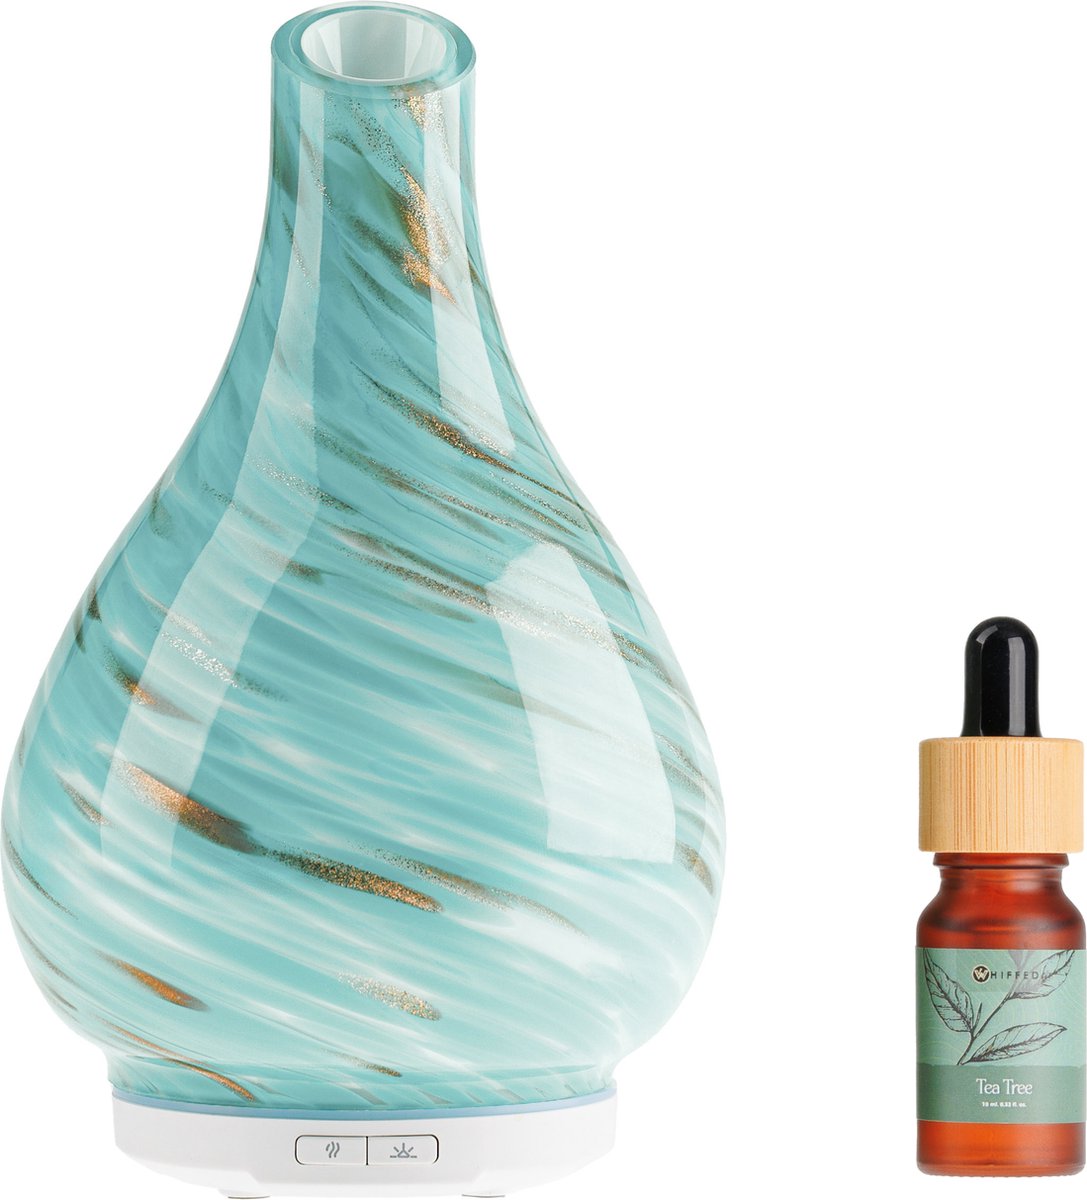 Whiffed® Luxe Aroma Diffuser Incl. Etherische olie - Tea Tree - Geurverspreider met Glazen Design - 8 uur Aromatherapie - Tot 80m2 - Essentiële Olie Vernevelaar & Diffuser